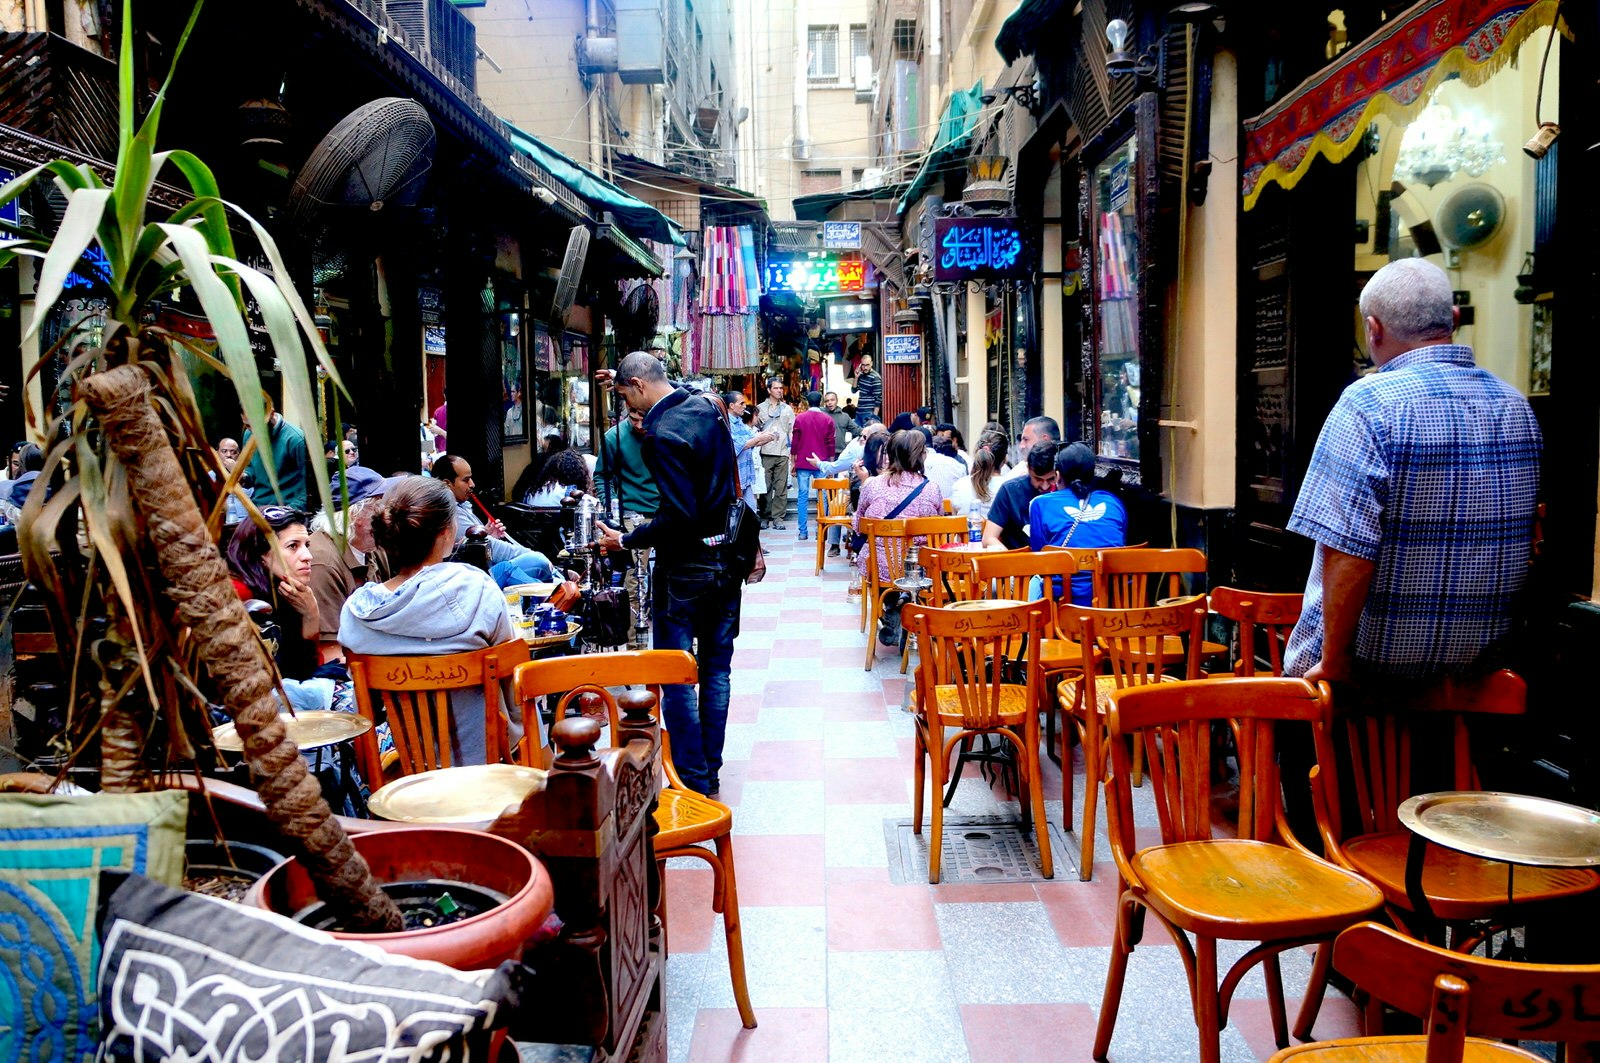 People relaxing and smoking shisha at Qahwet Fishawi (Fishawi's Cafe) in Khan Al Khalili, Cairo. Image by Karima Hassan Ragab / Lonely Planet